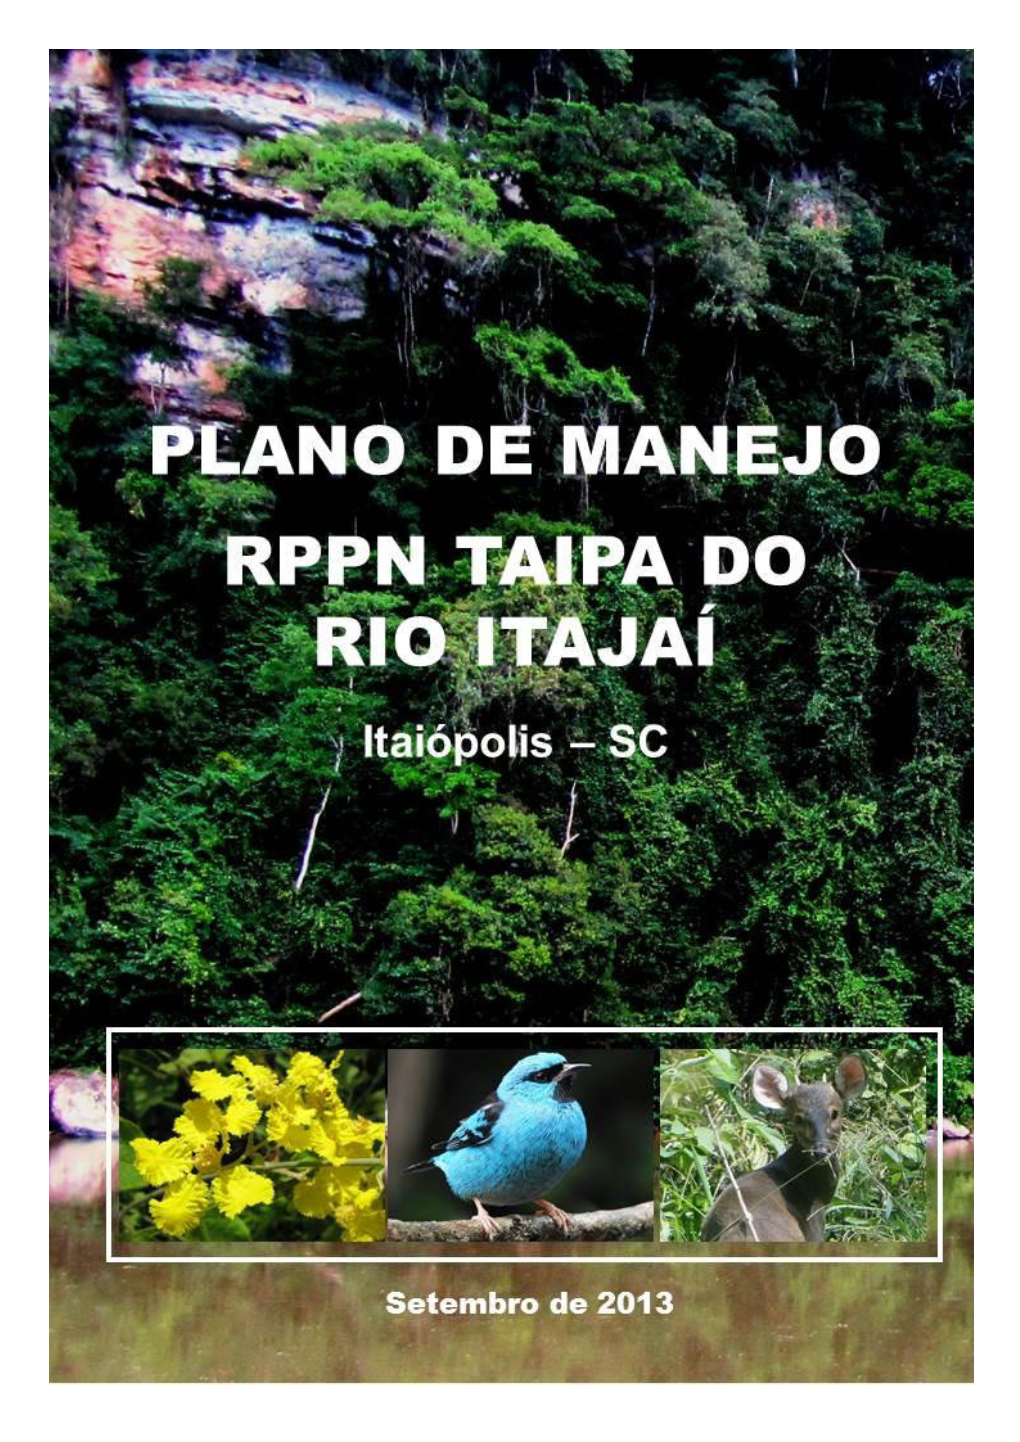 Plano De Manejo Rppn Taipa Do Rio Itajaí